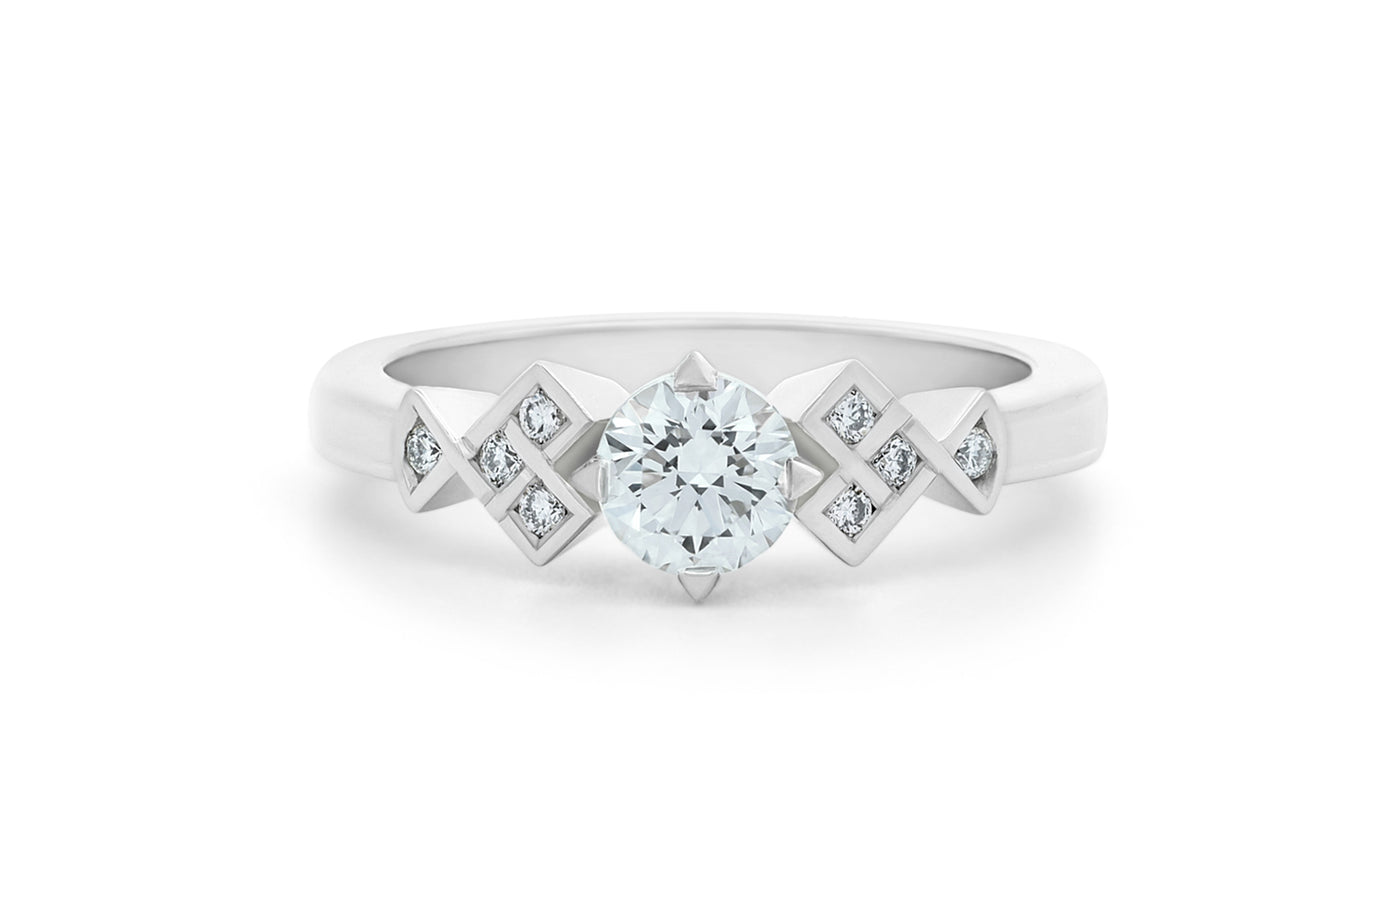 Istella: Brilliant Cut Diamond Solitaire Ring